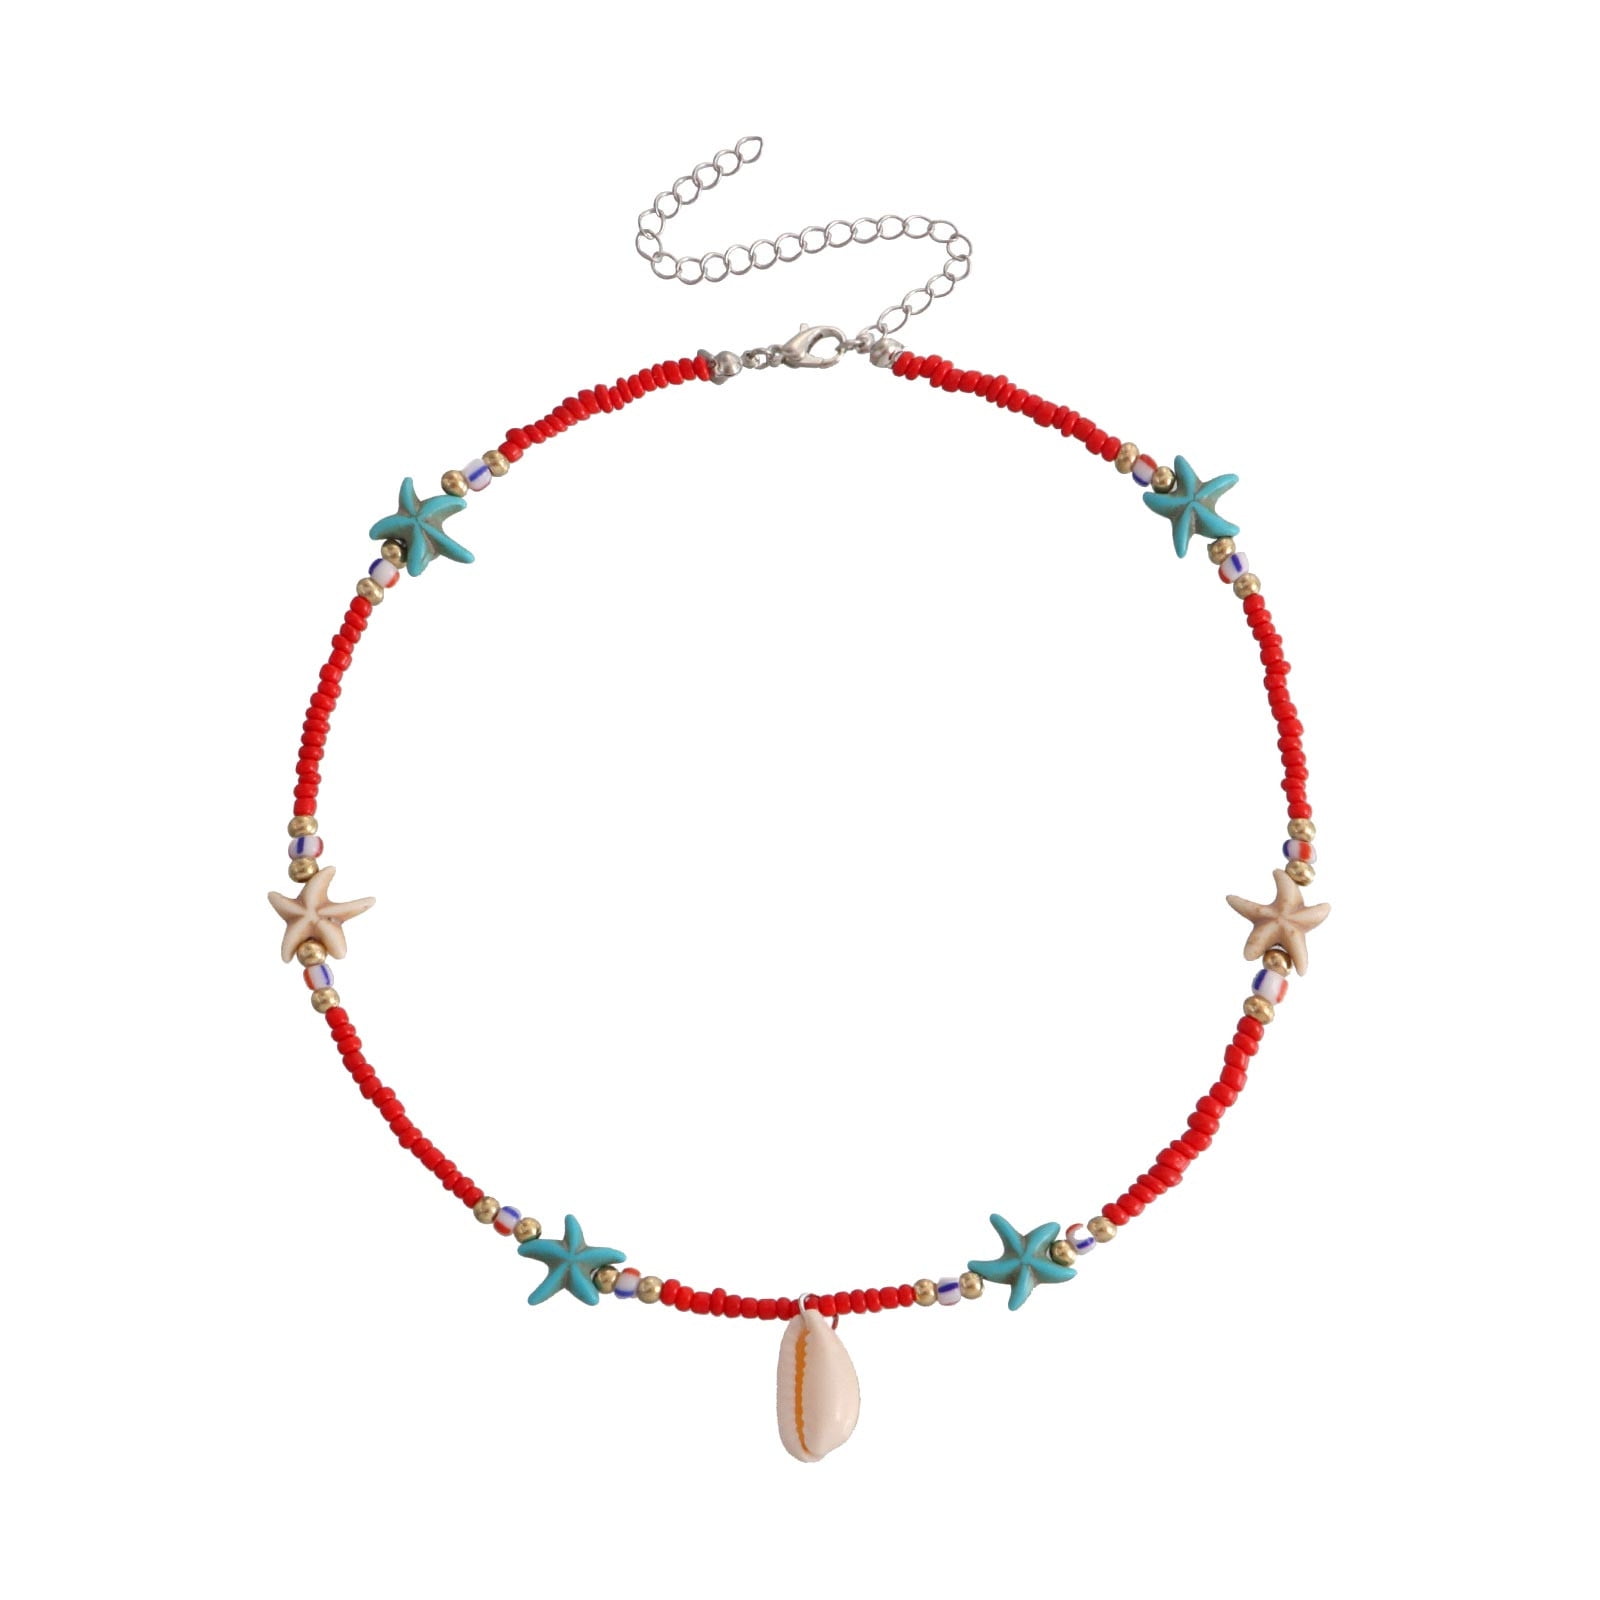 Tiezhimi Bohemian Handmade Beaded Choker Necklace Adjustable Colorful ...